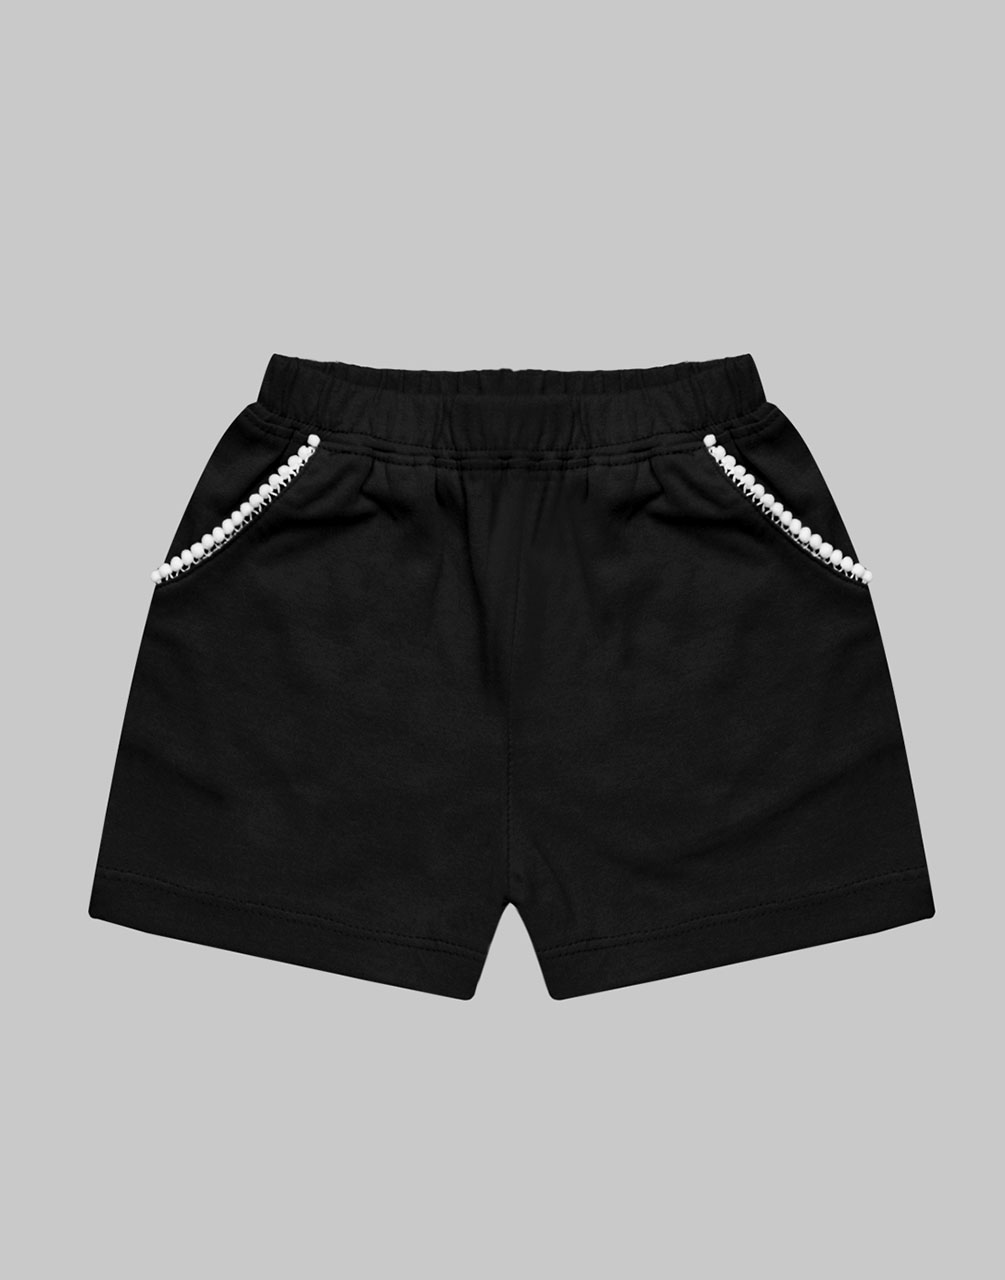 Black Jersery Boho Shorts - A.T.U.N.